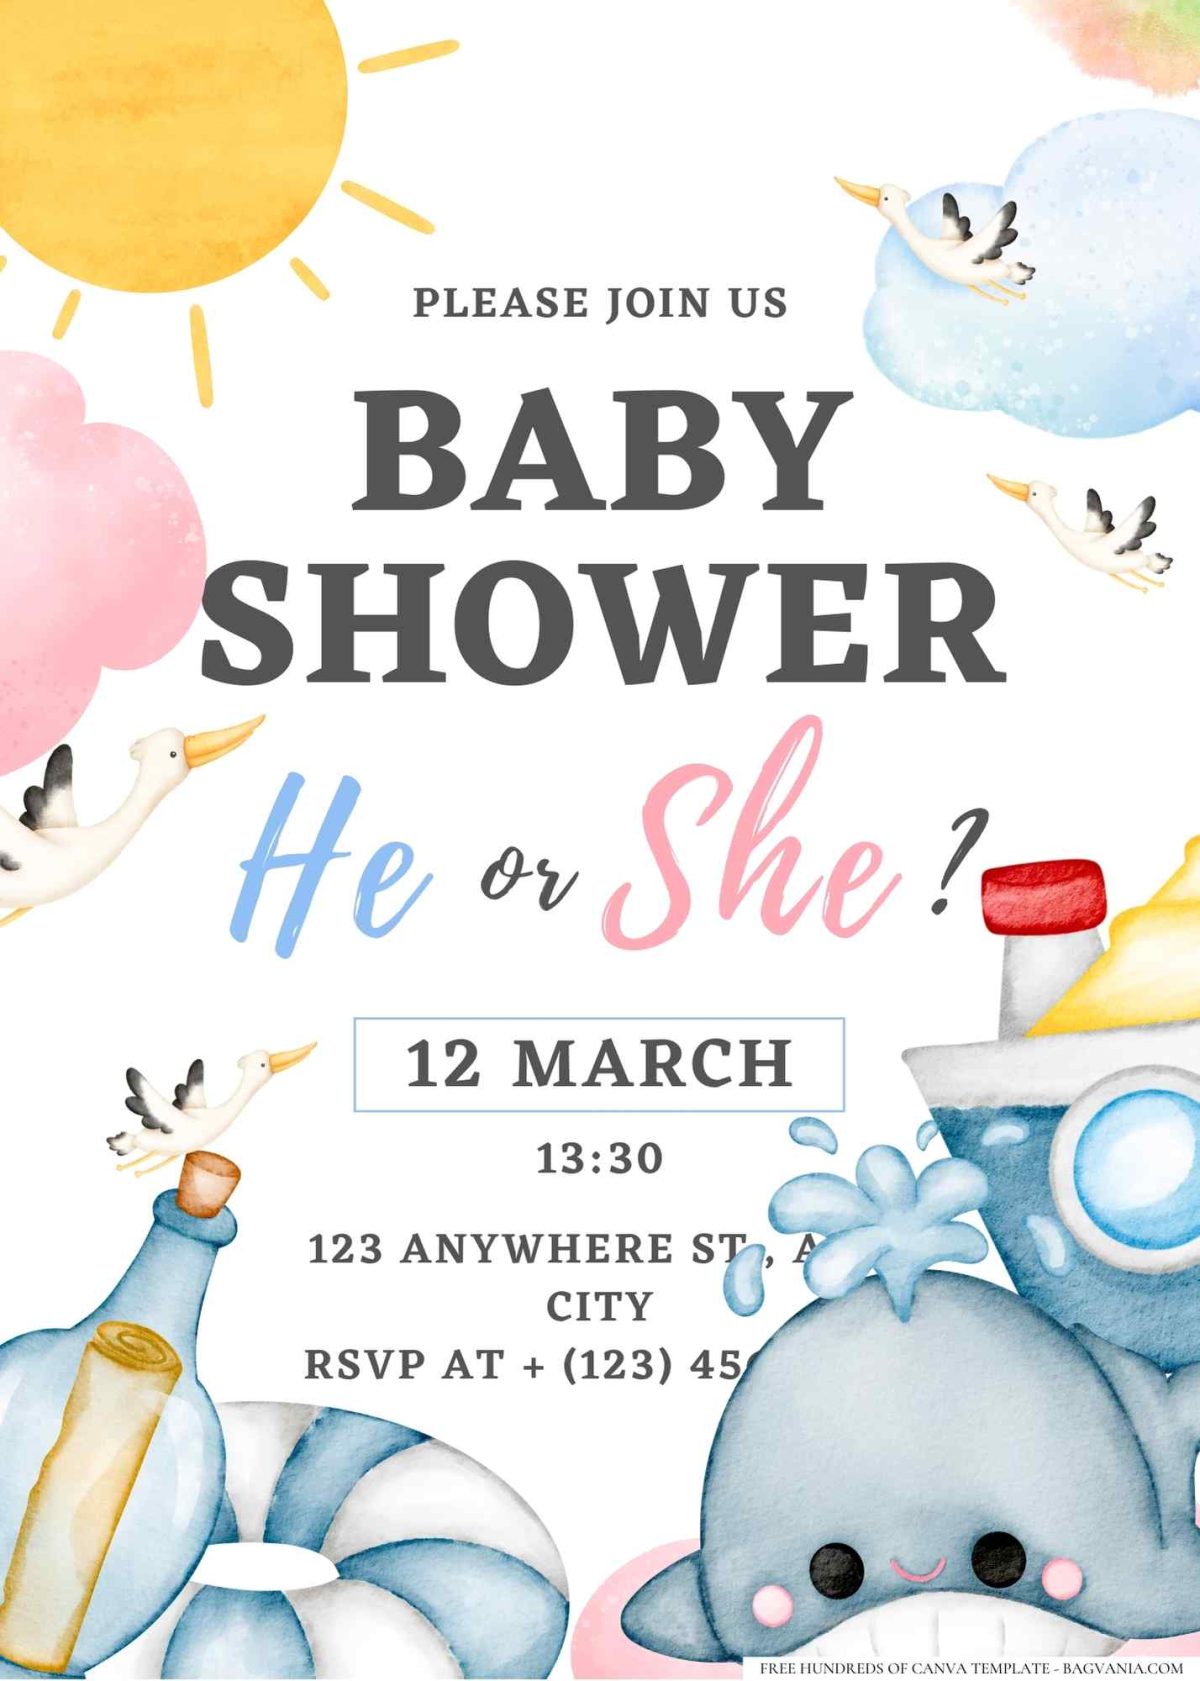 FREE Editable Sailboat Regatta Baby Shower Invitation